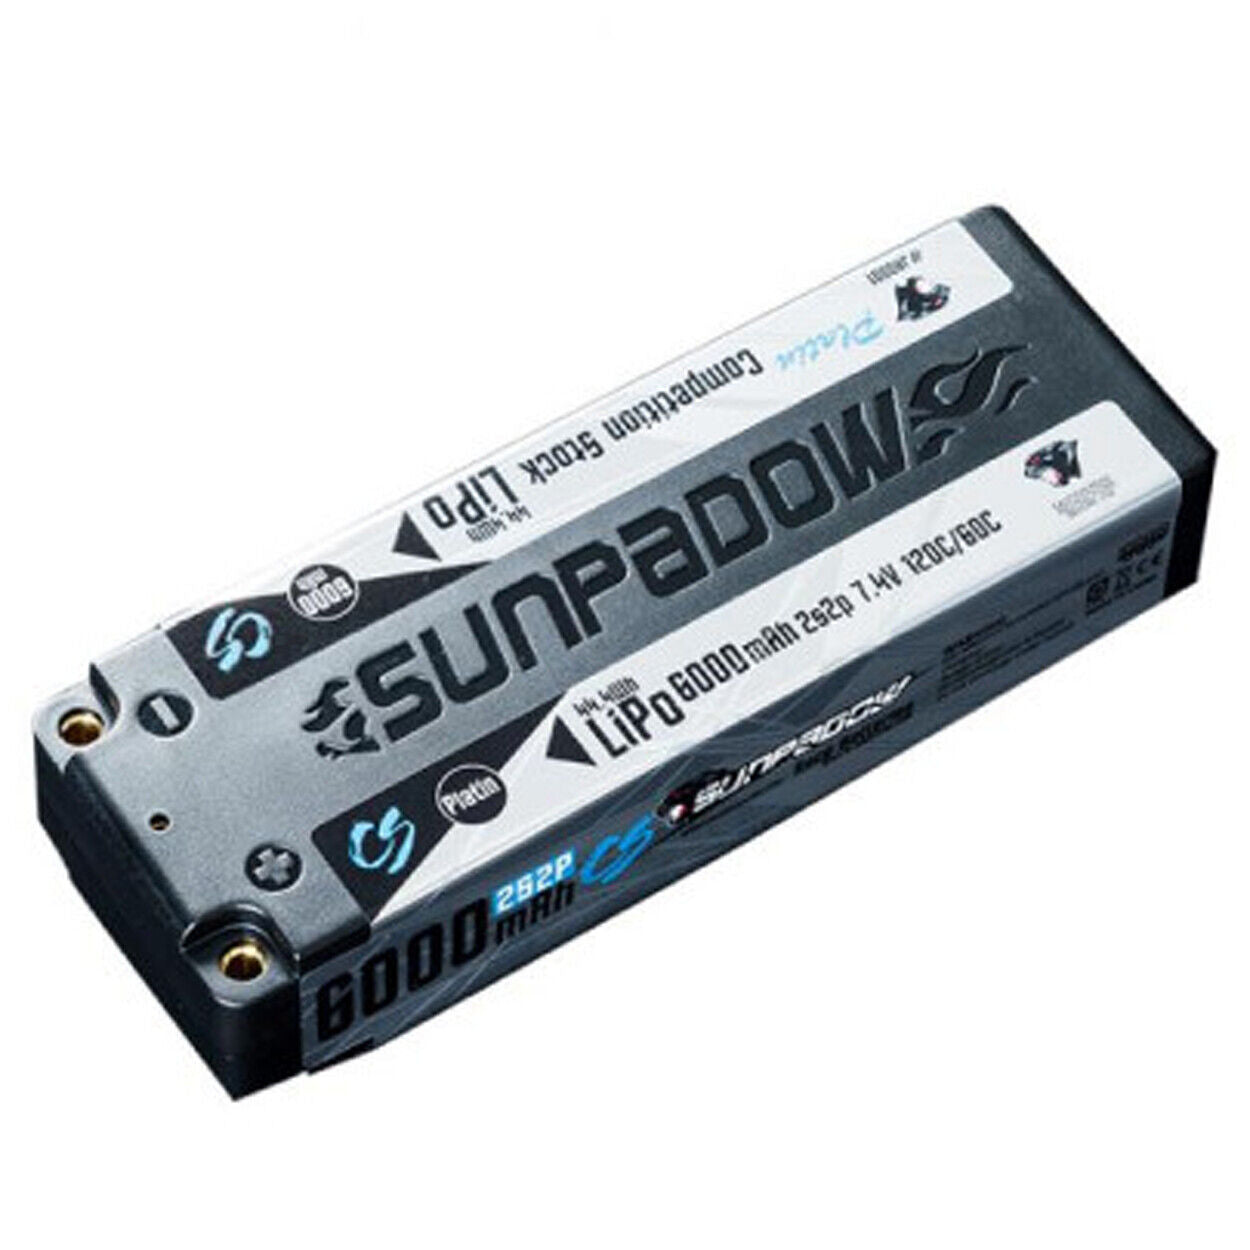 Sunpadow Platin Series 7.4V 6000mAh 120C/60C LiPo Battery